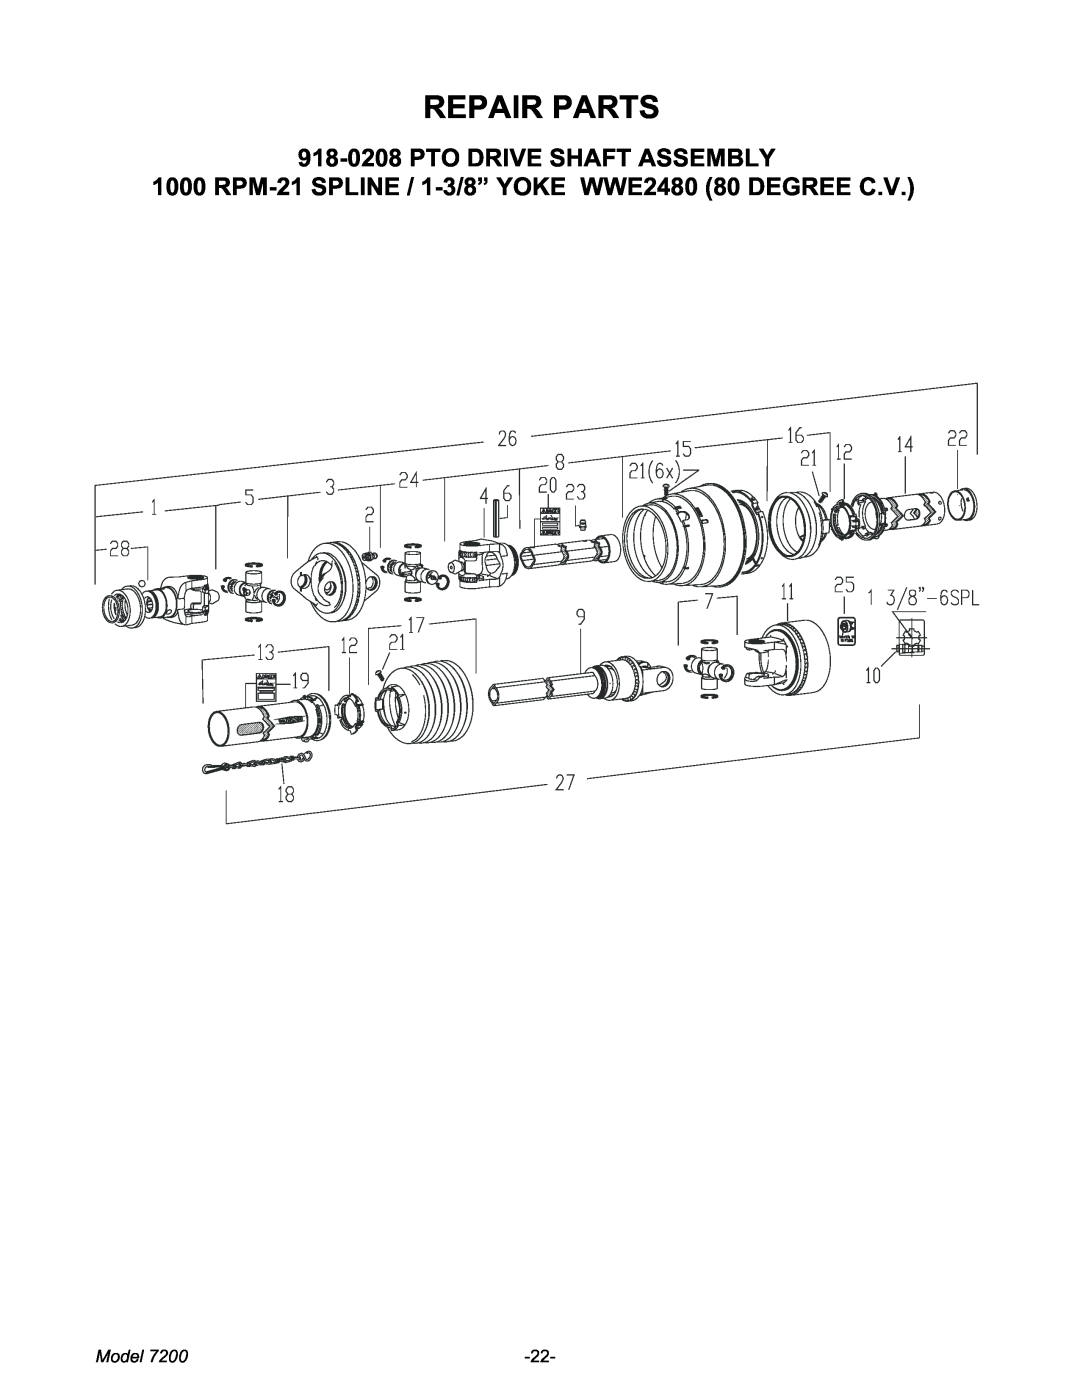 Meyer 7200 manual Repair Parts, 918-0208PTO DRIVE SHAFT ASSEMBLY, Model 